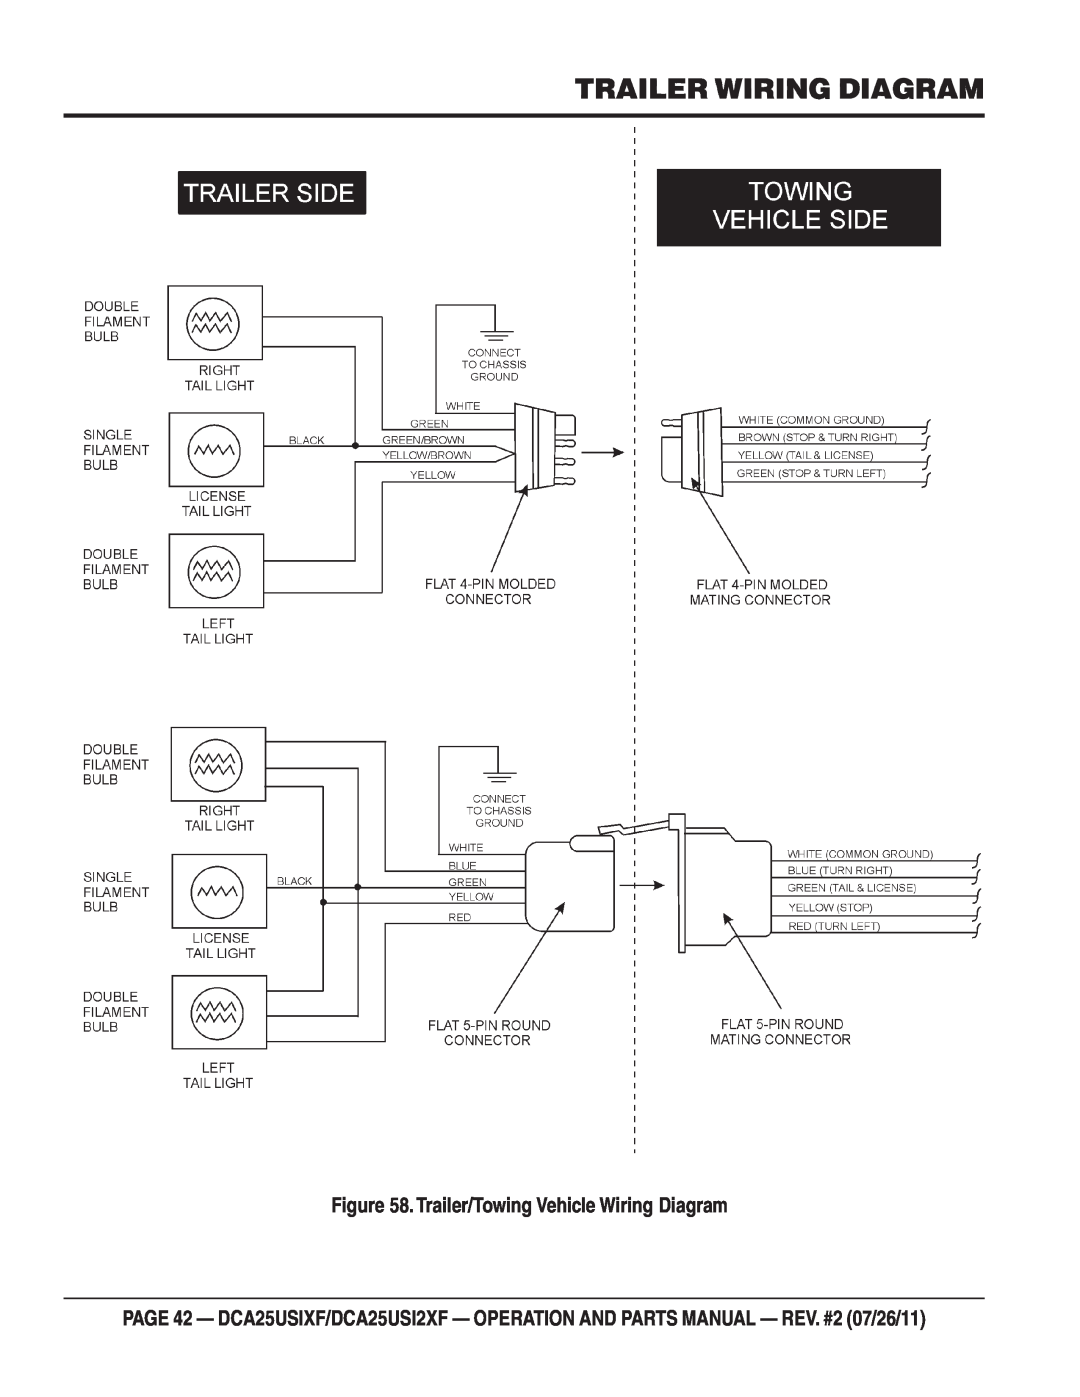 Multiquip DCA25USIXF, DCA25USI2XF operation manual Trailer Wiring Diagram, Trailer/Towing Vehicle Wiring Diagram 